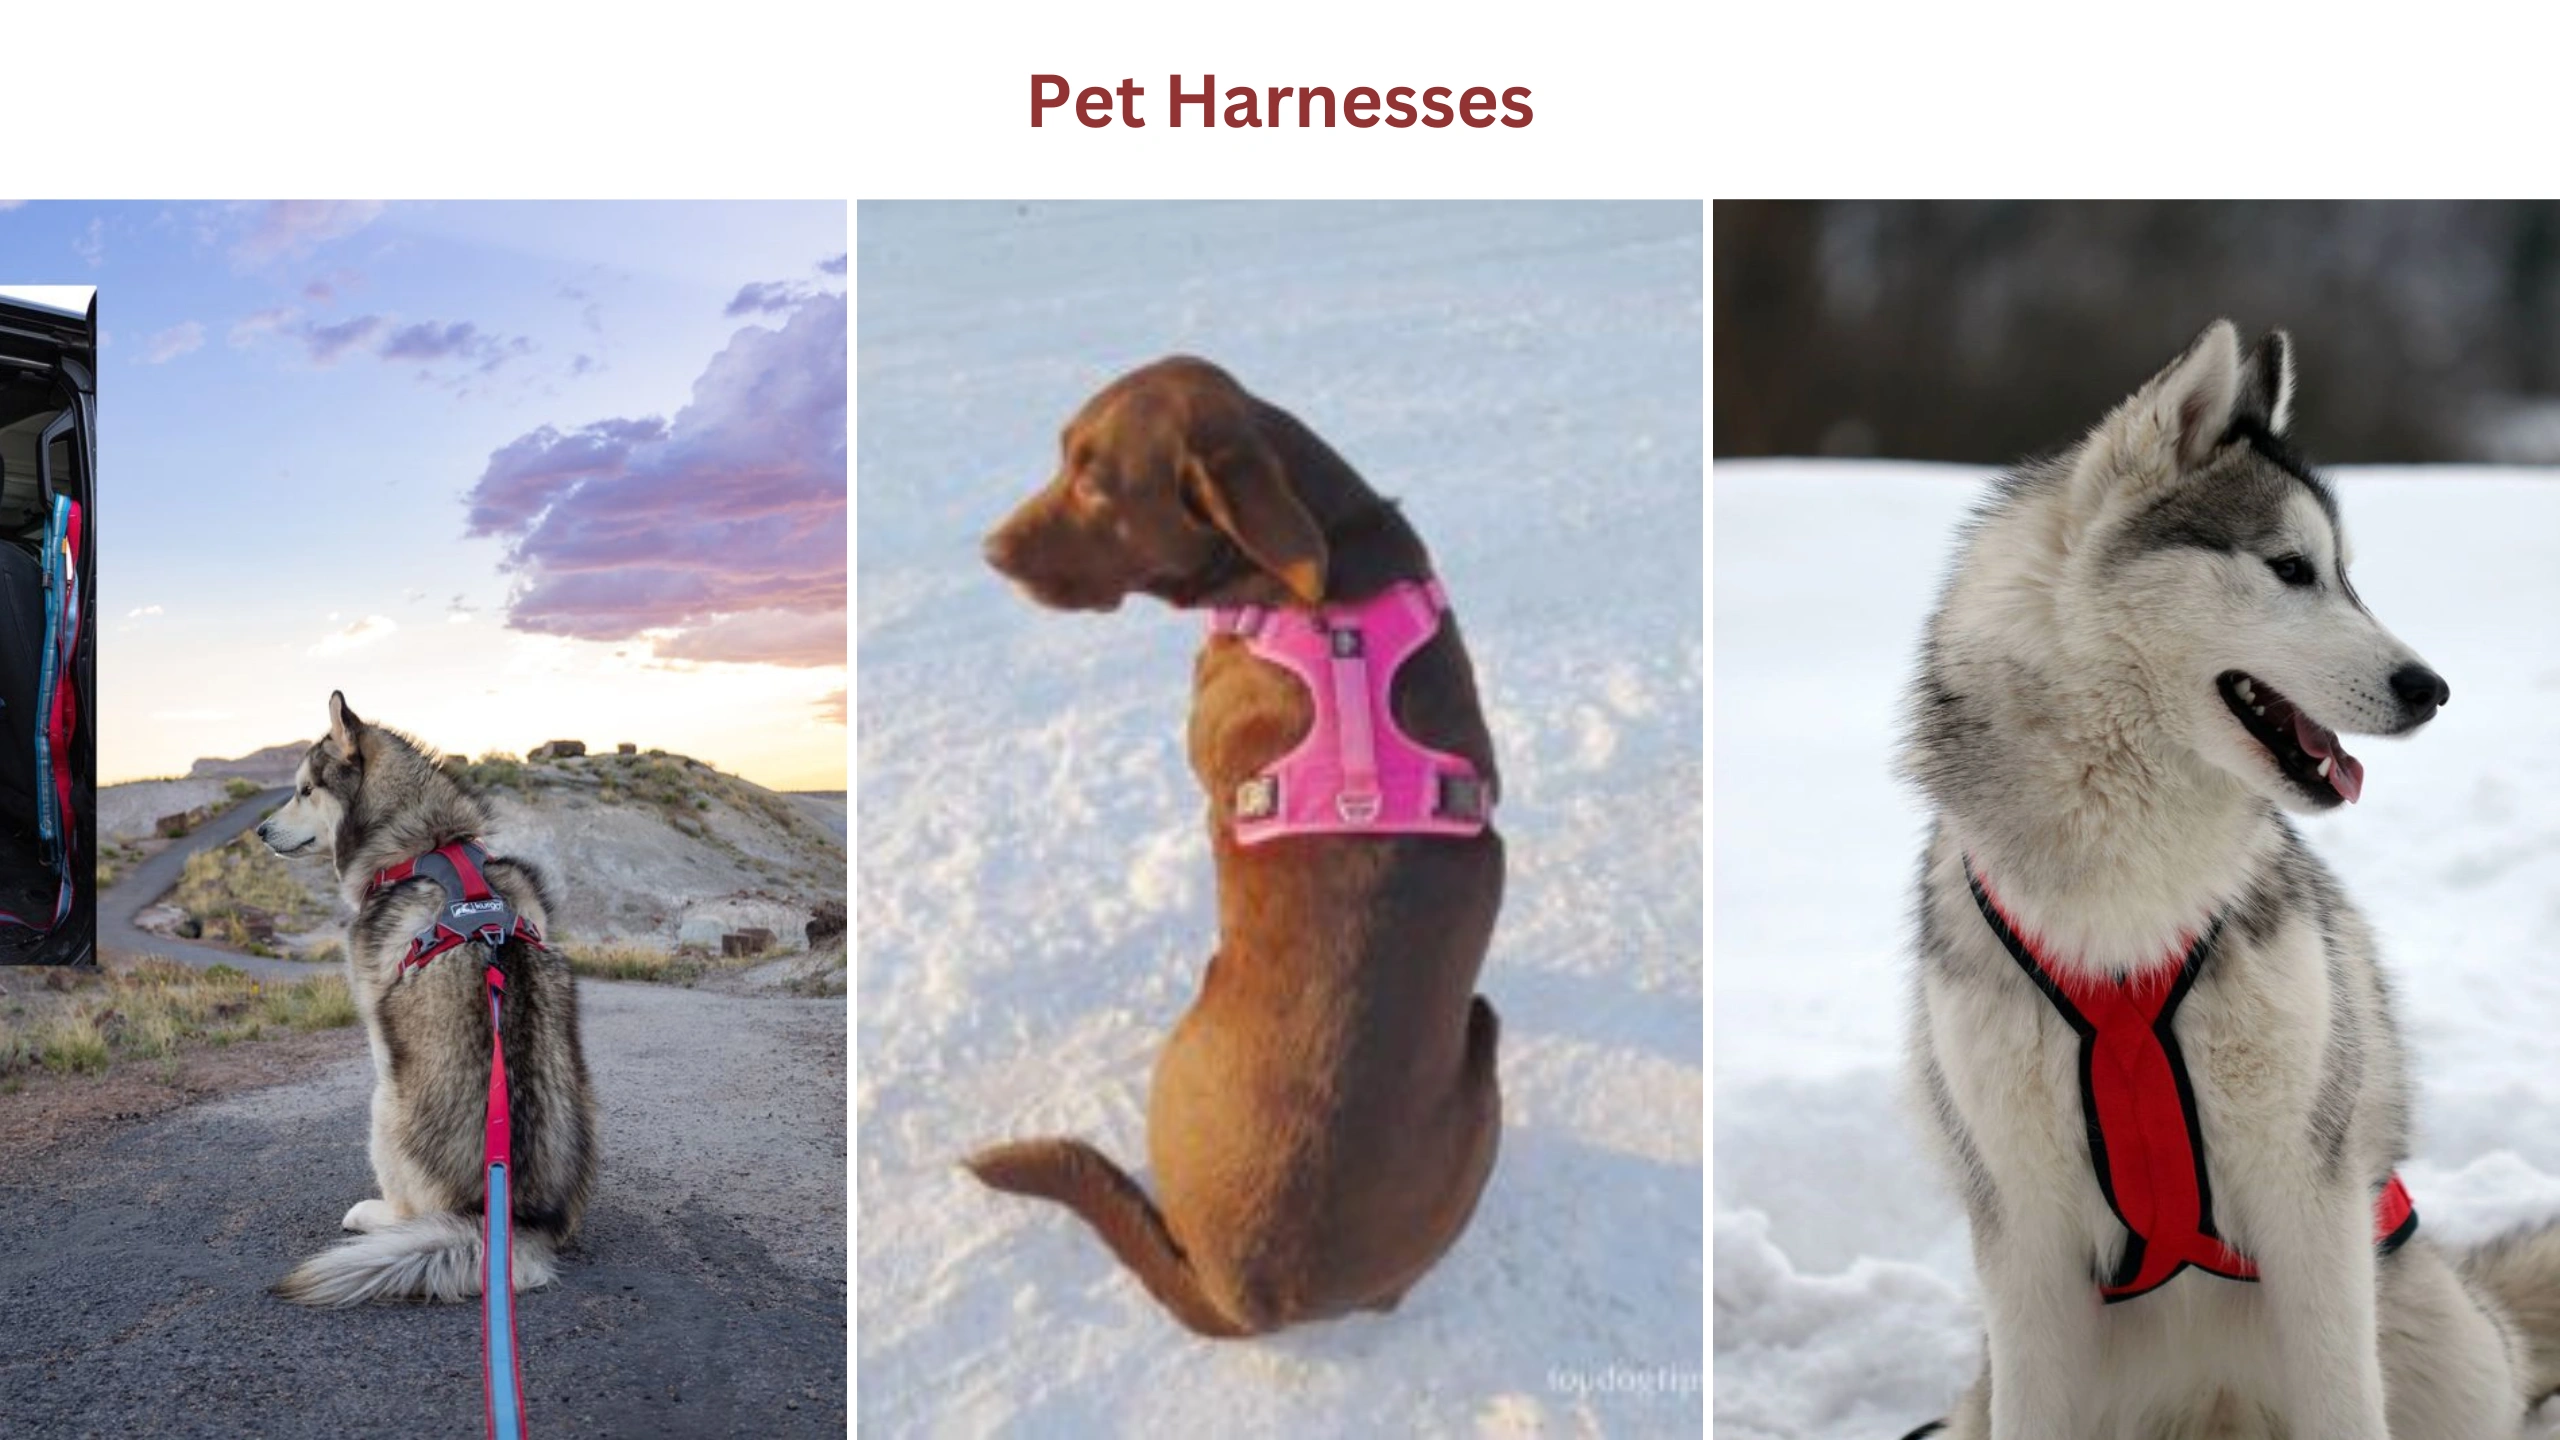 Pet harnesses